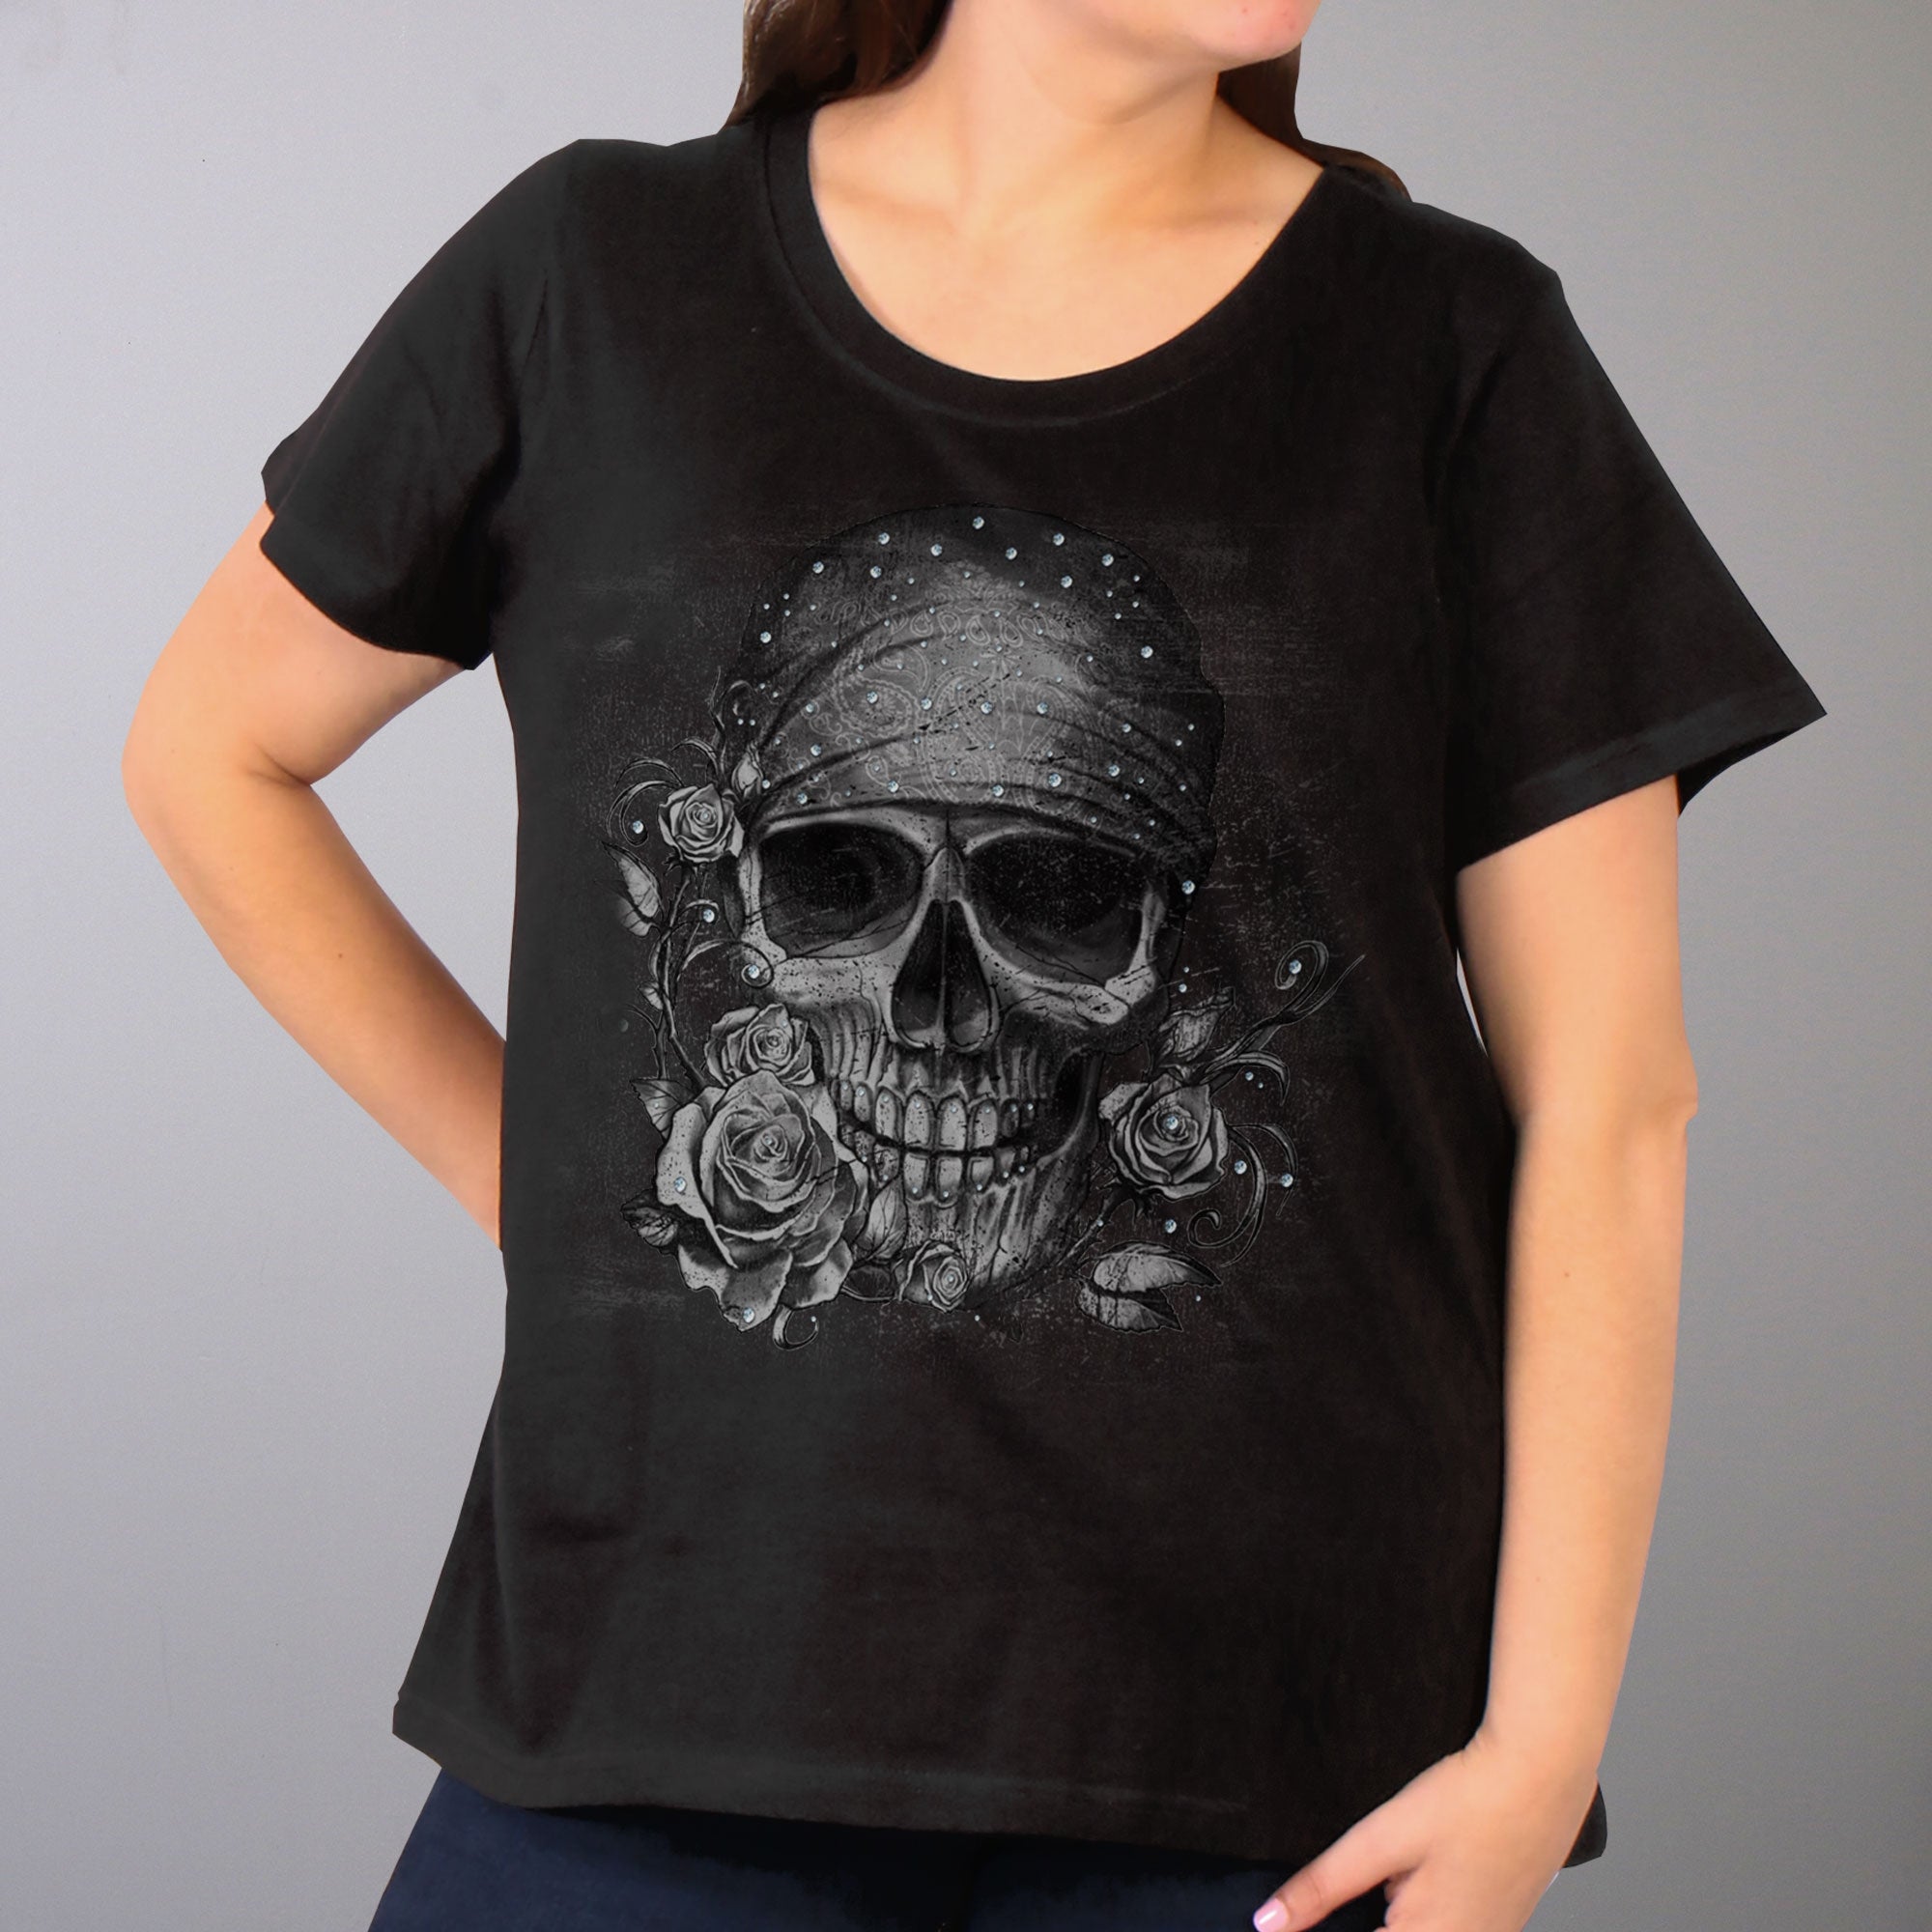 Hot Leathers Skull Bandana Full Figured Plus Size Ladies T-Shirt GLR1508